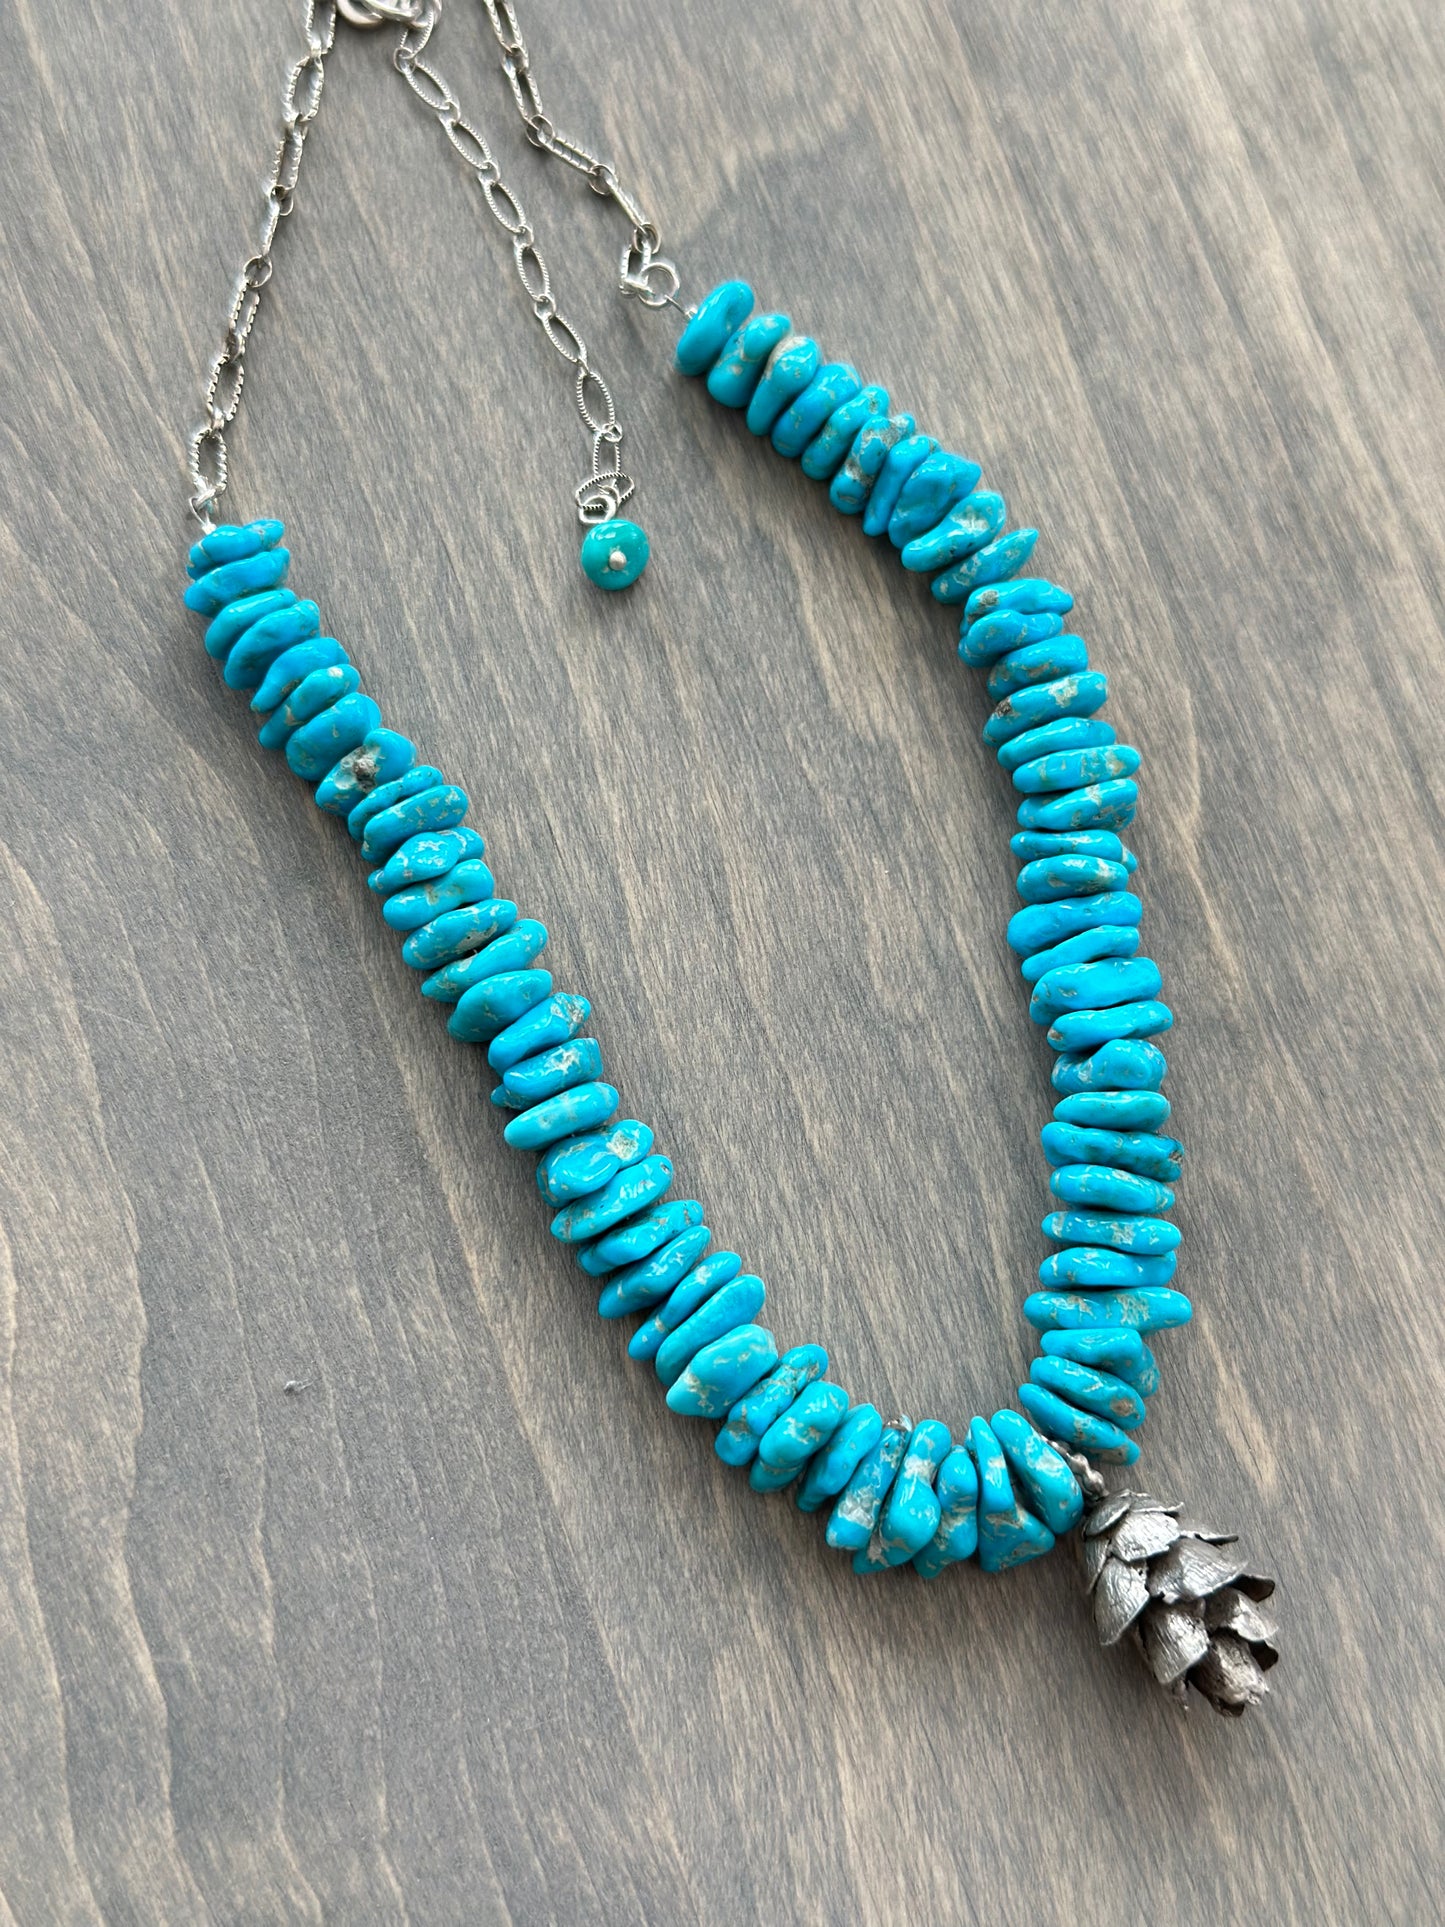 Hemlock Cone Necklace with Kingman Turquoise Beads